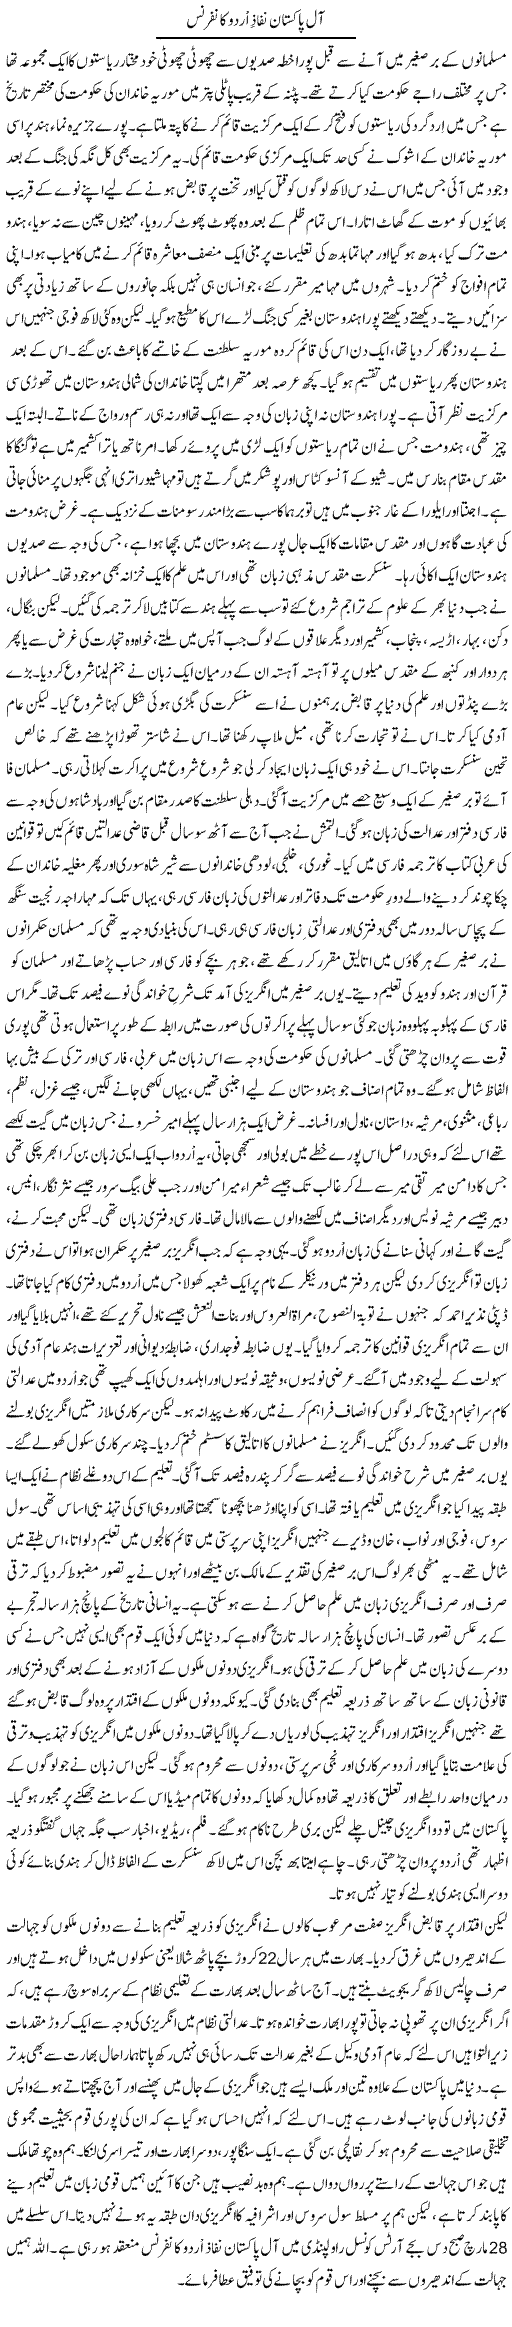 All Pakistan nifaz urdu conference By Orya Maqbool Jan